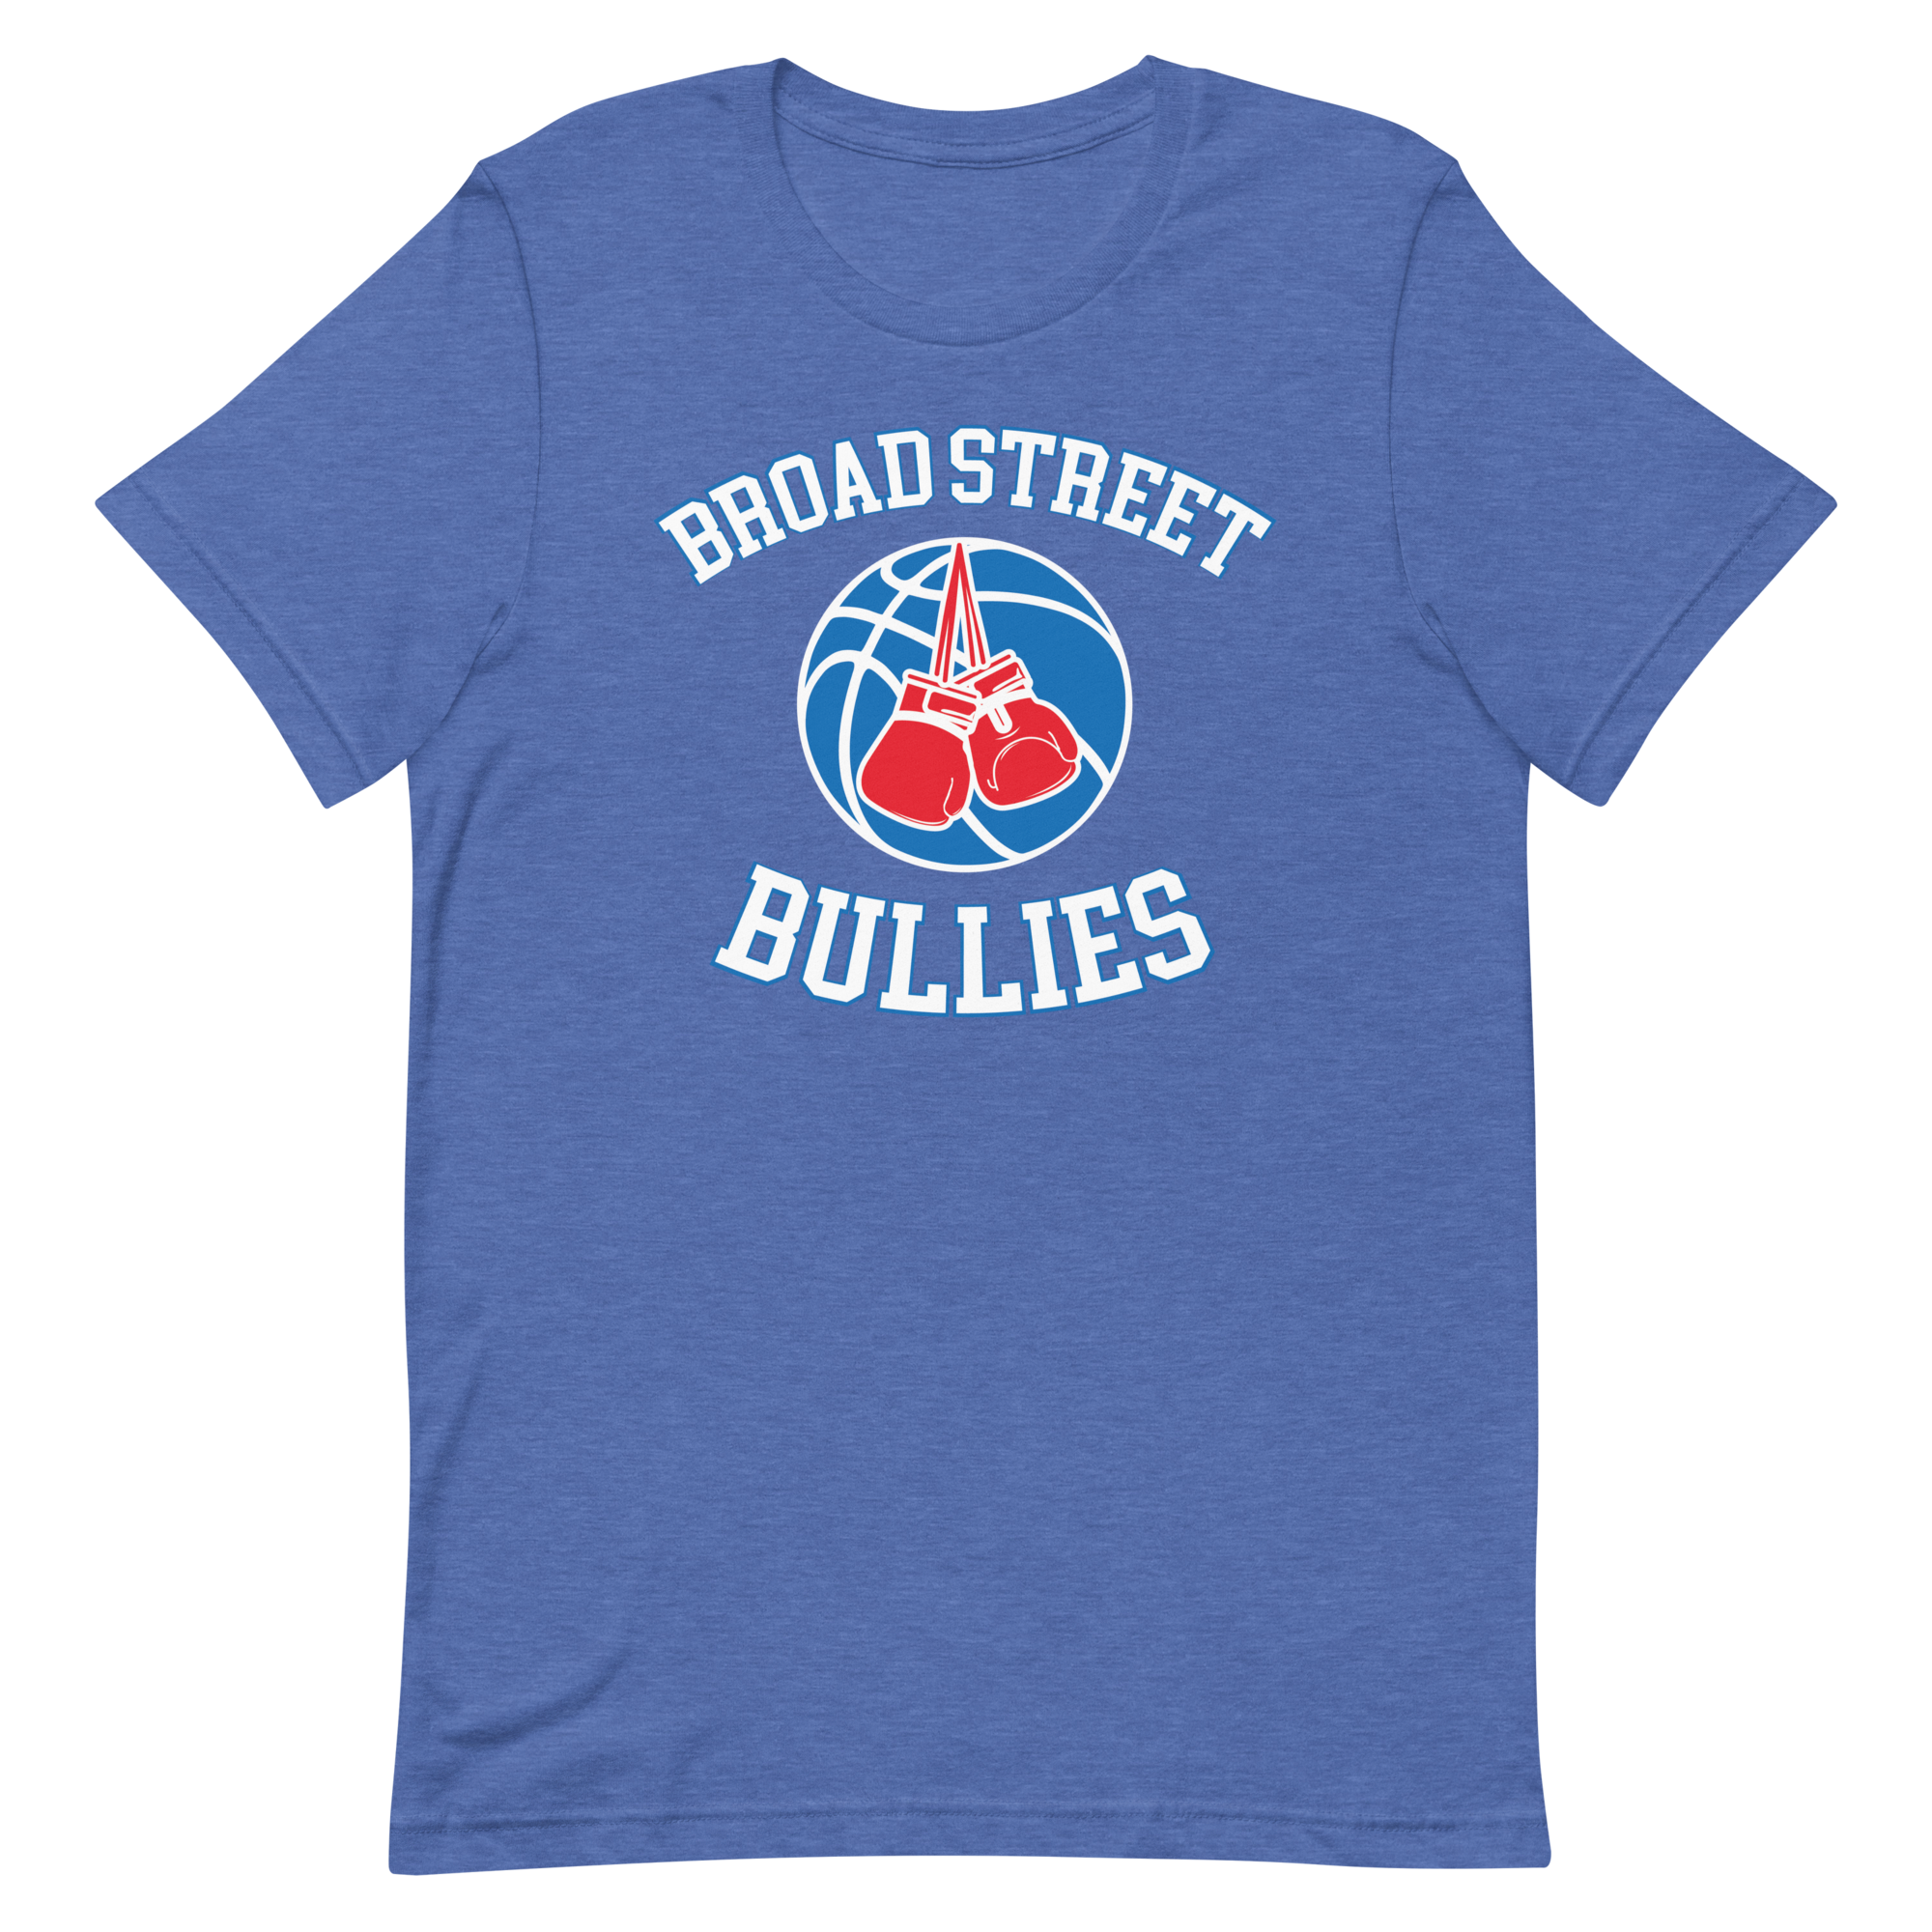 Philly Sports Shirts Broad Street Bullies Hockey Shirt Orange / XL